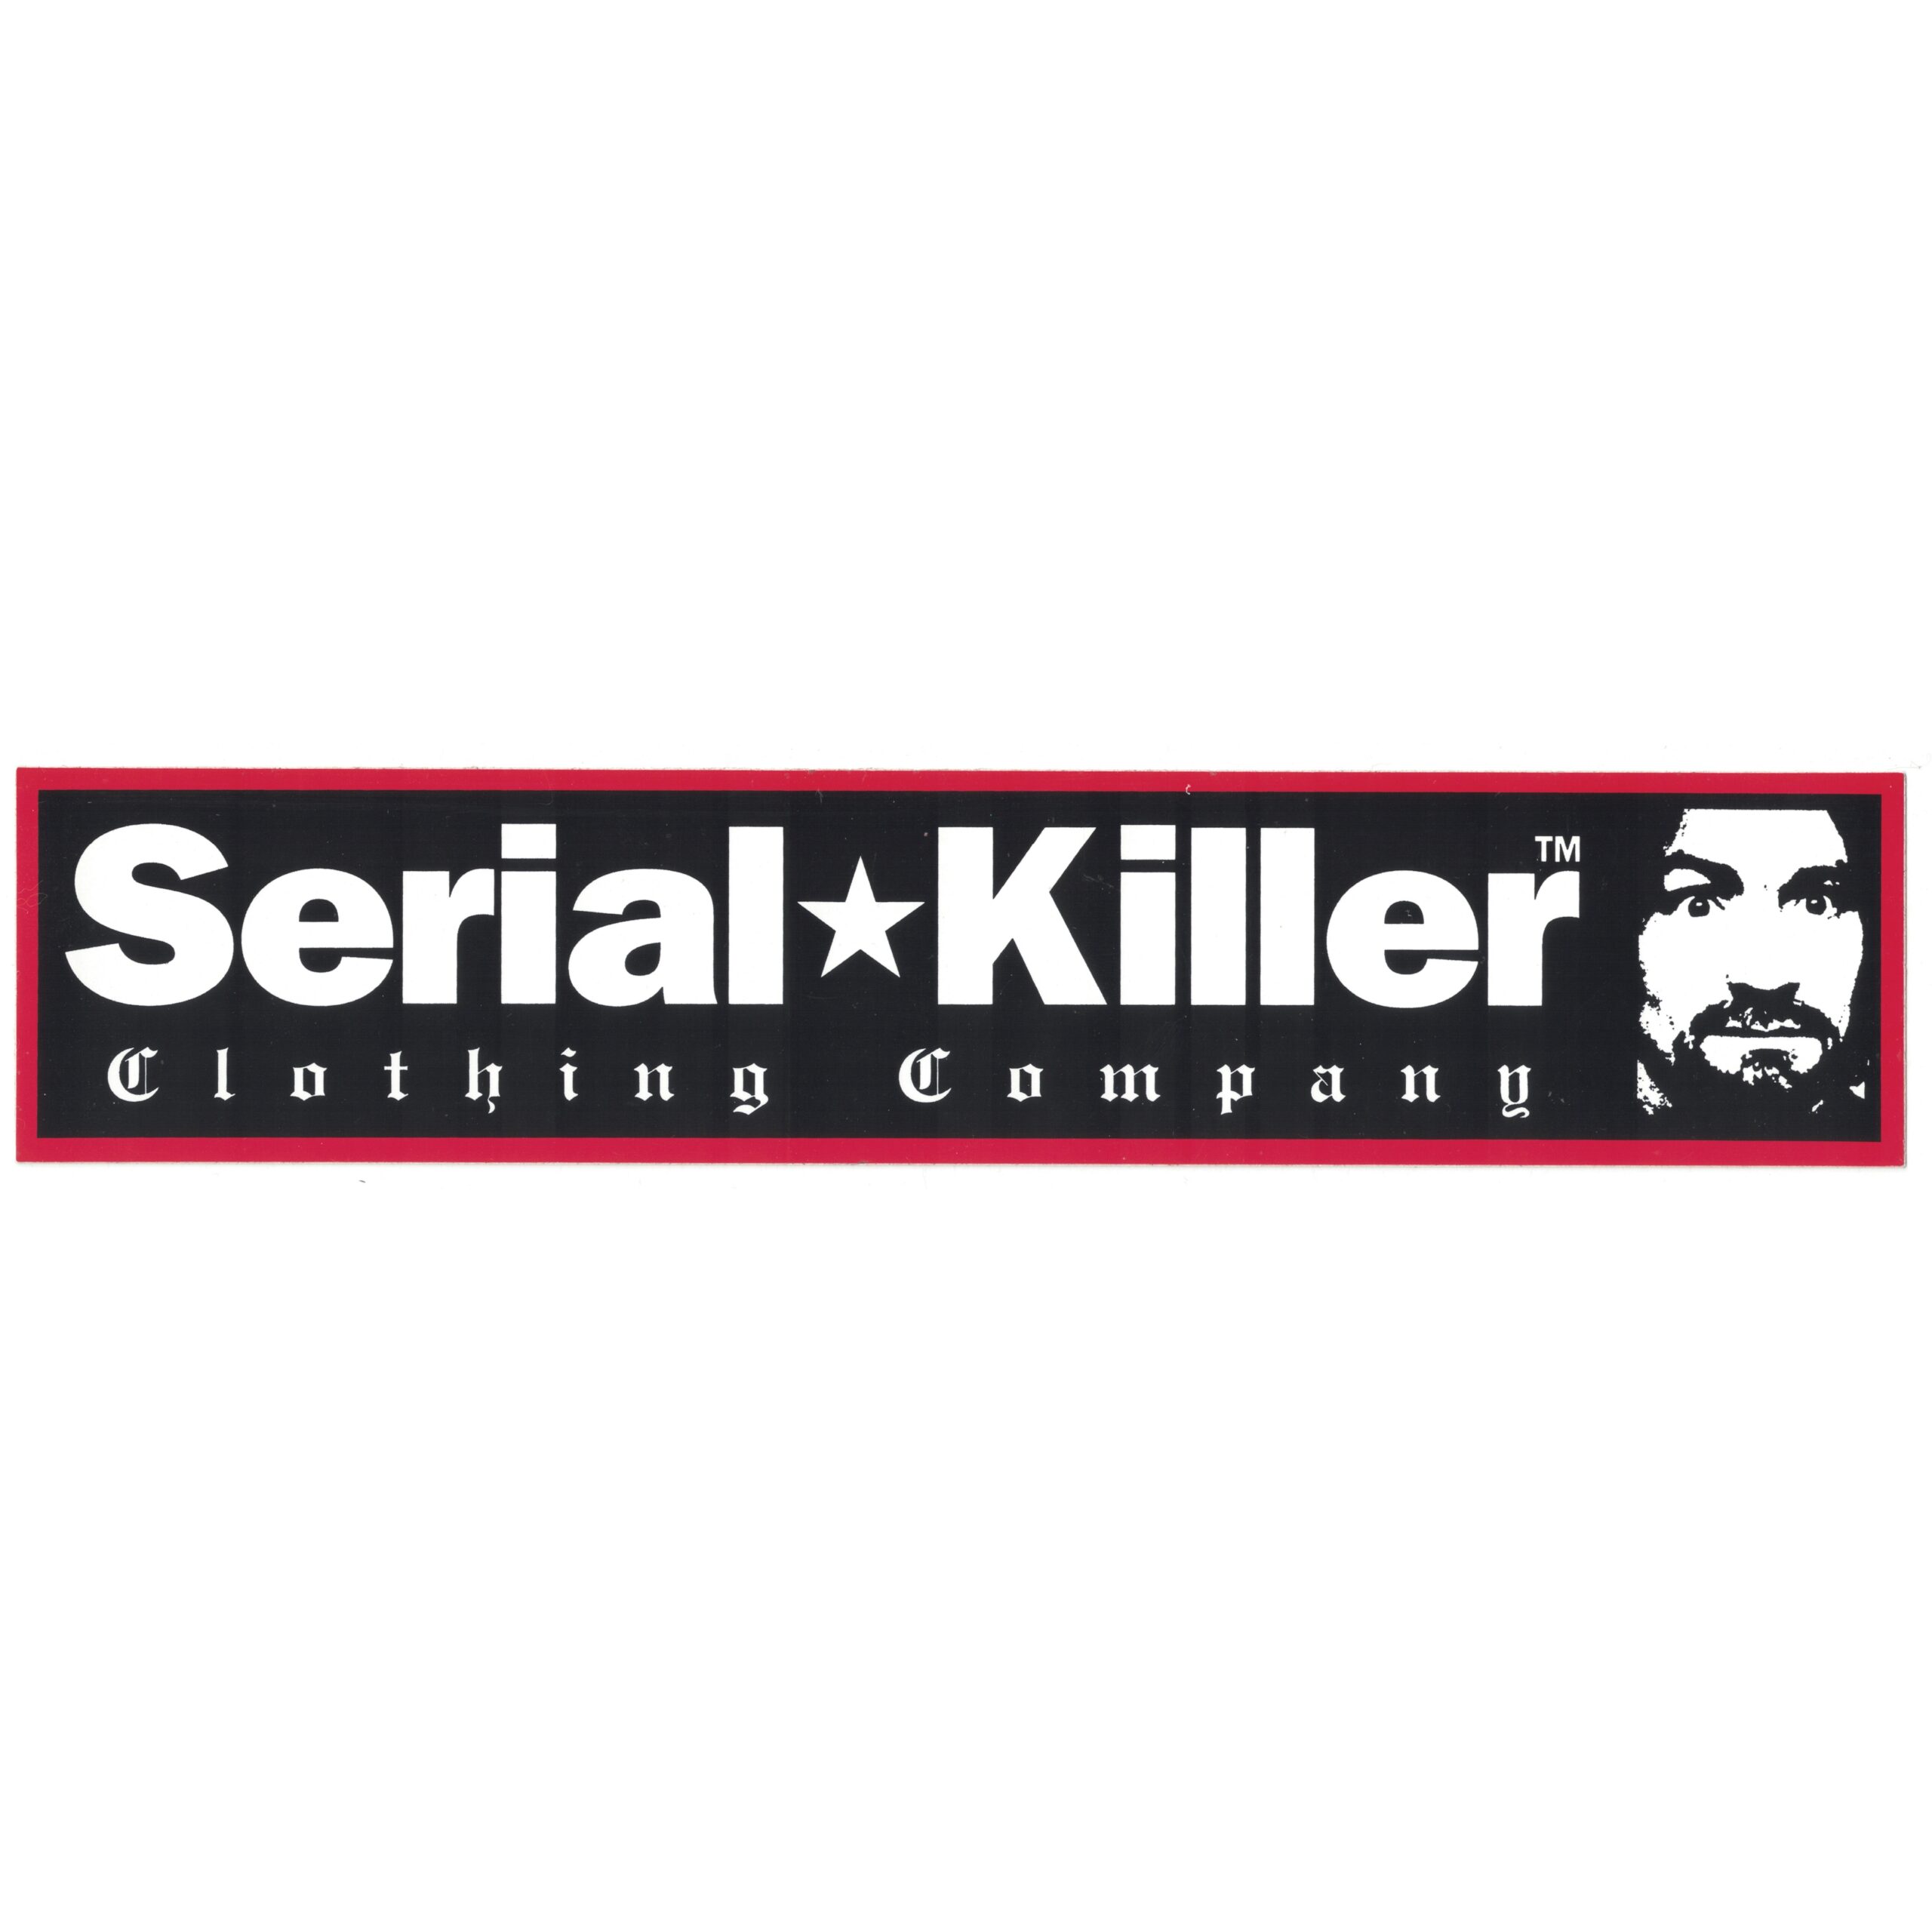 Serial Killer Clothing Company Charles Manson Logo